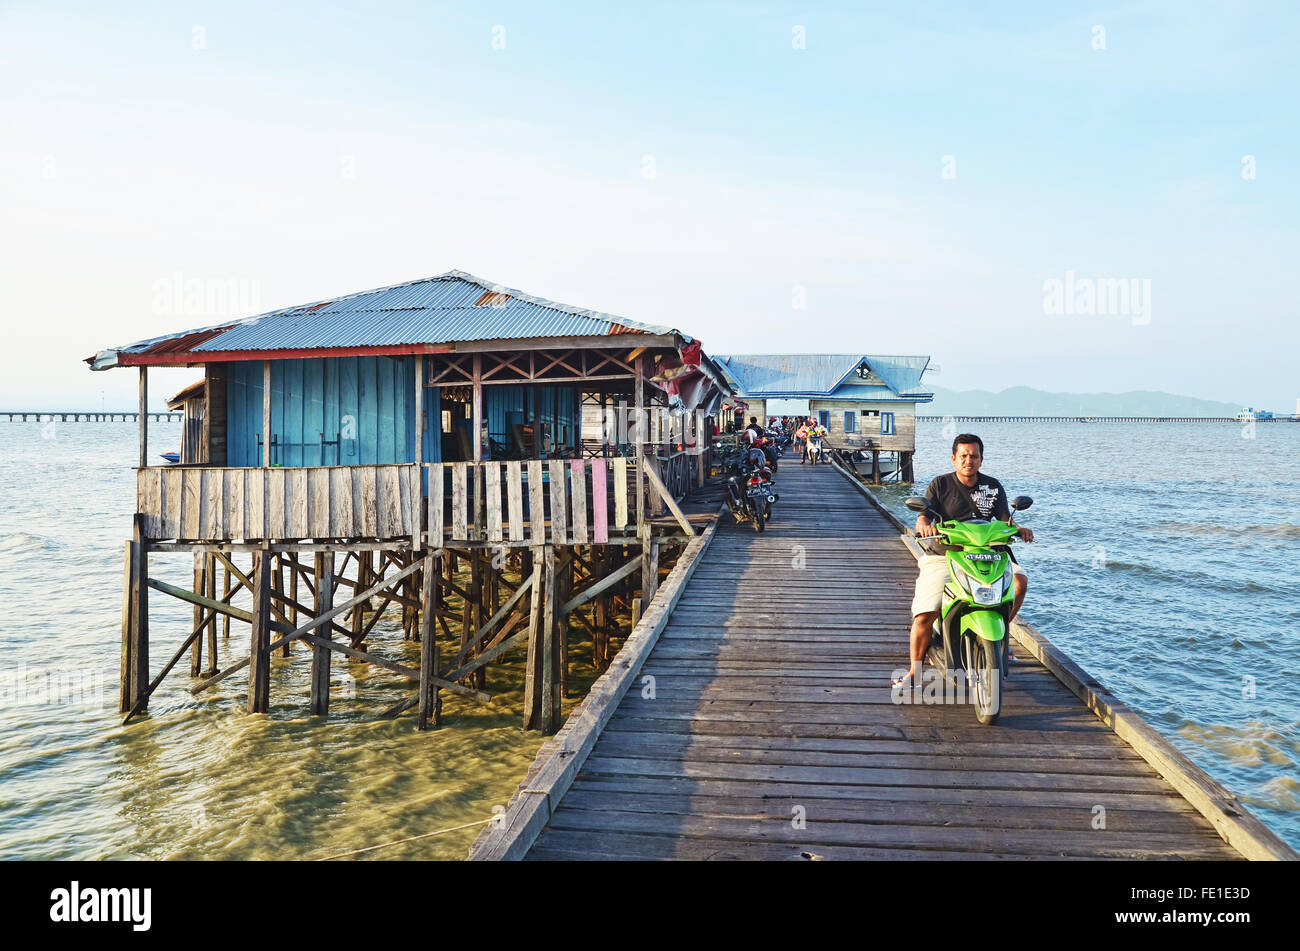 Stilt house at Sei Nyamuk port in Sebatik Island, North Borneo Stock Photo